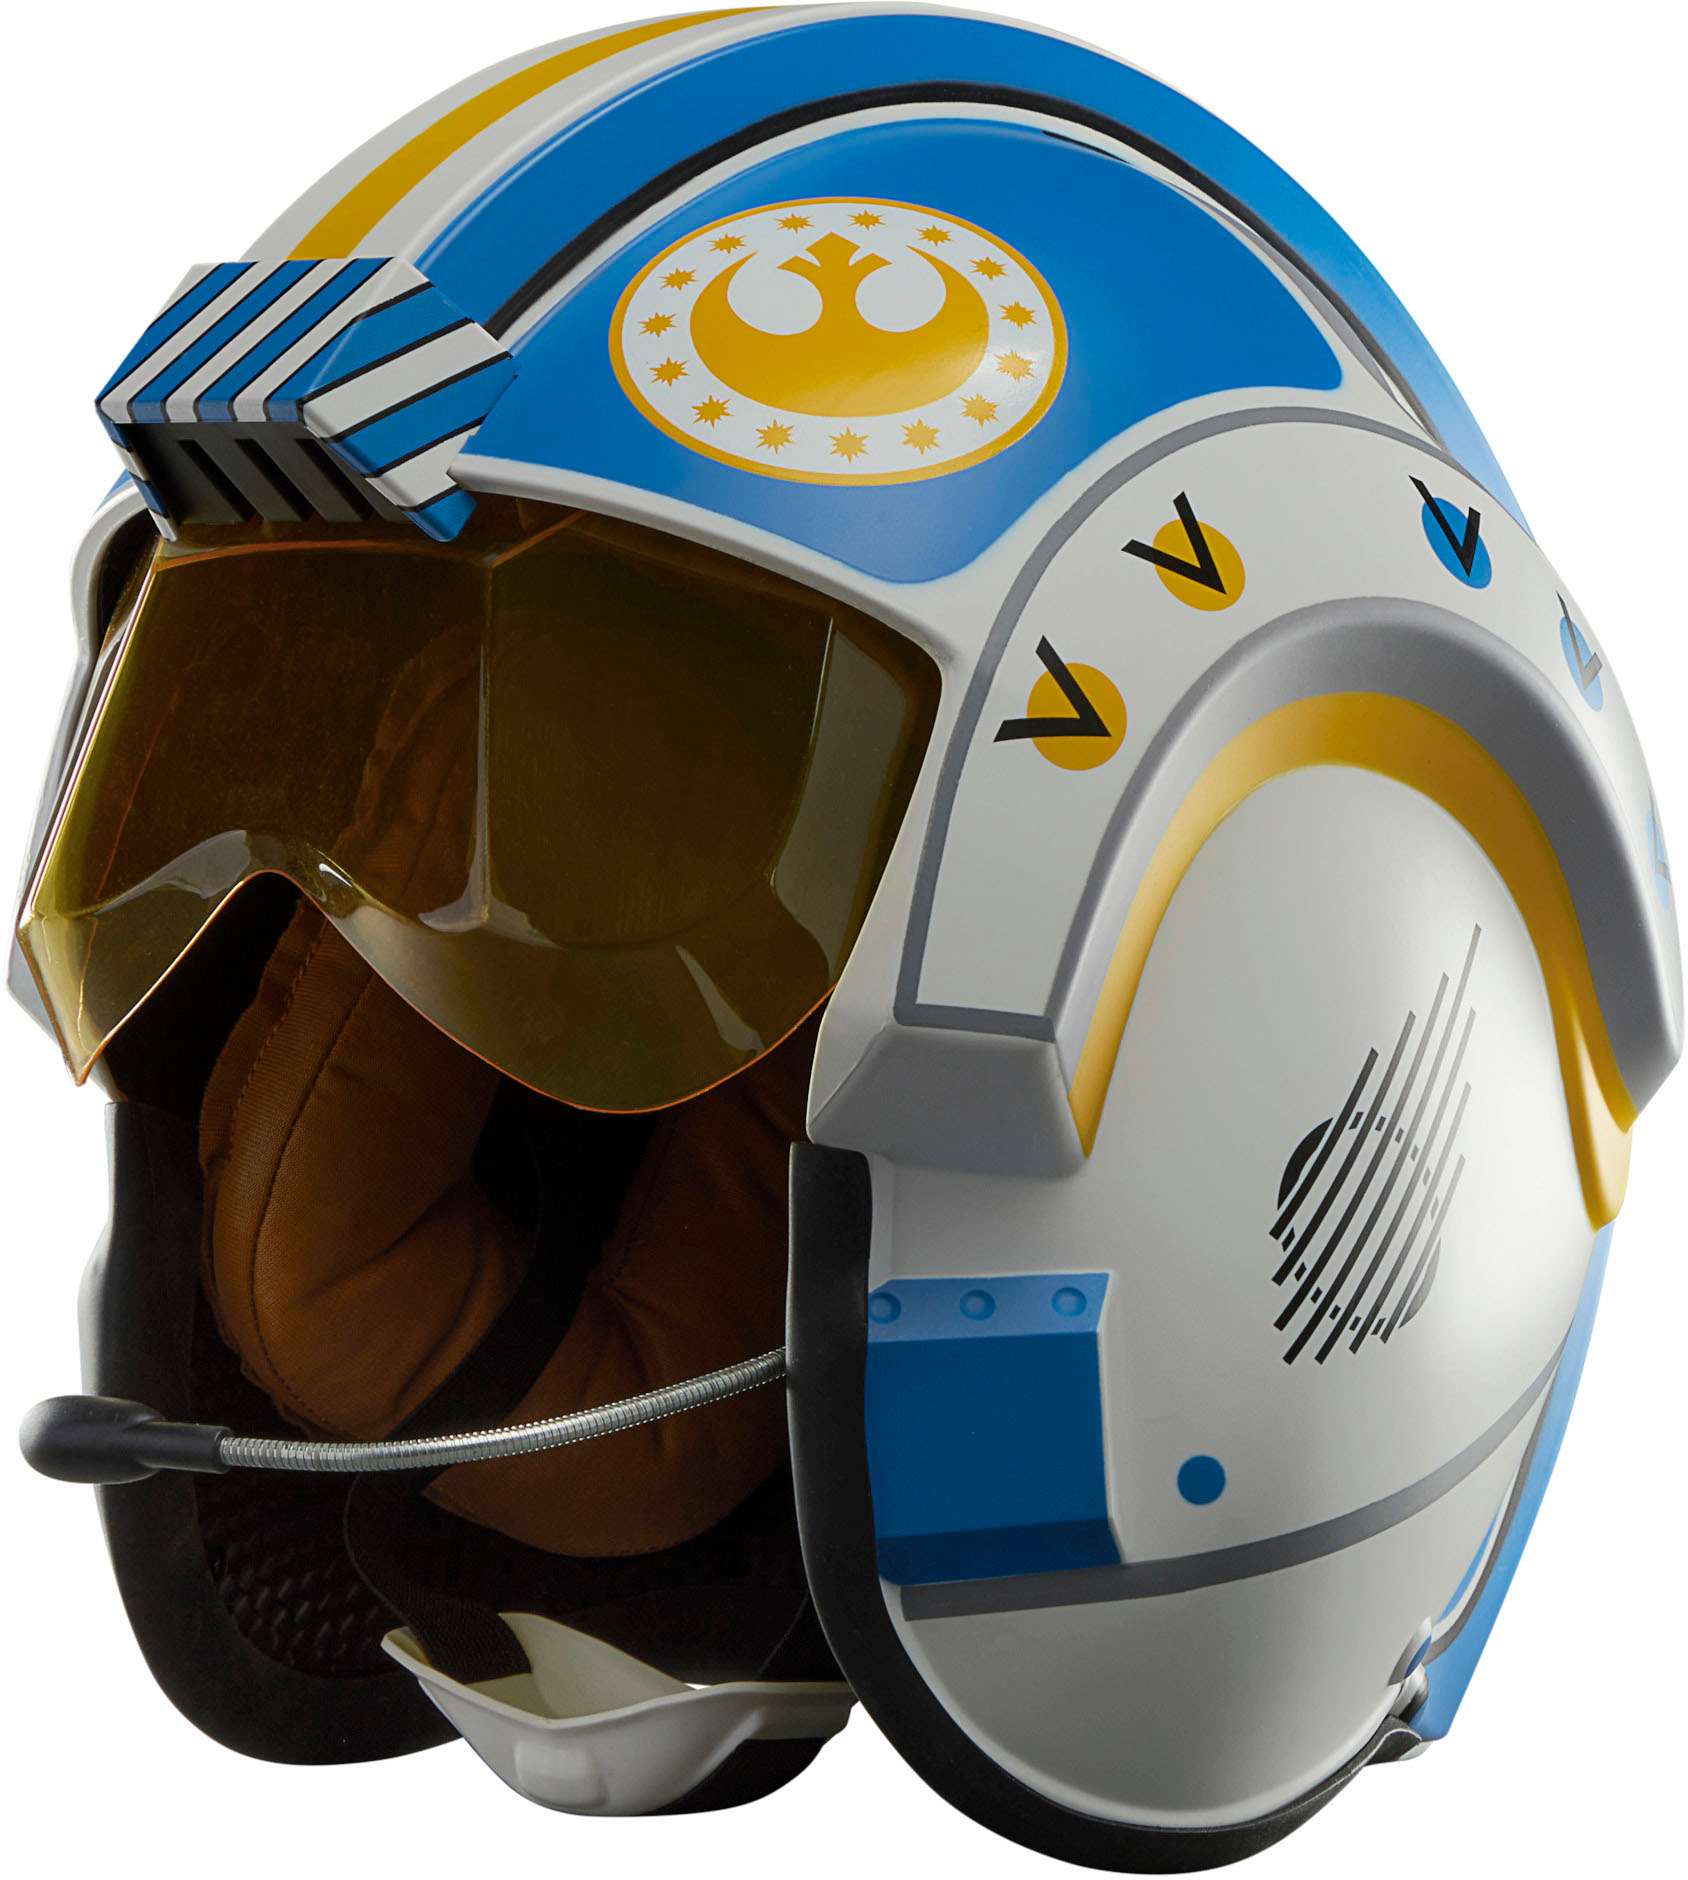 Angle View: Star Wars - The Black Series Carson Teva Electronic Helmet